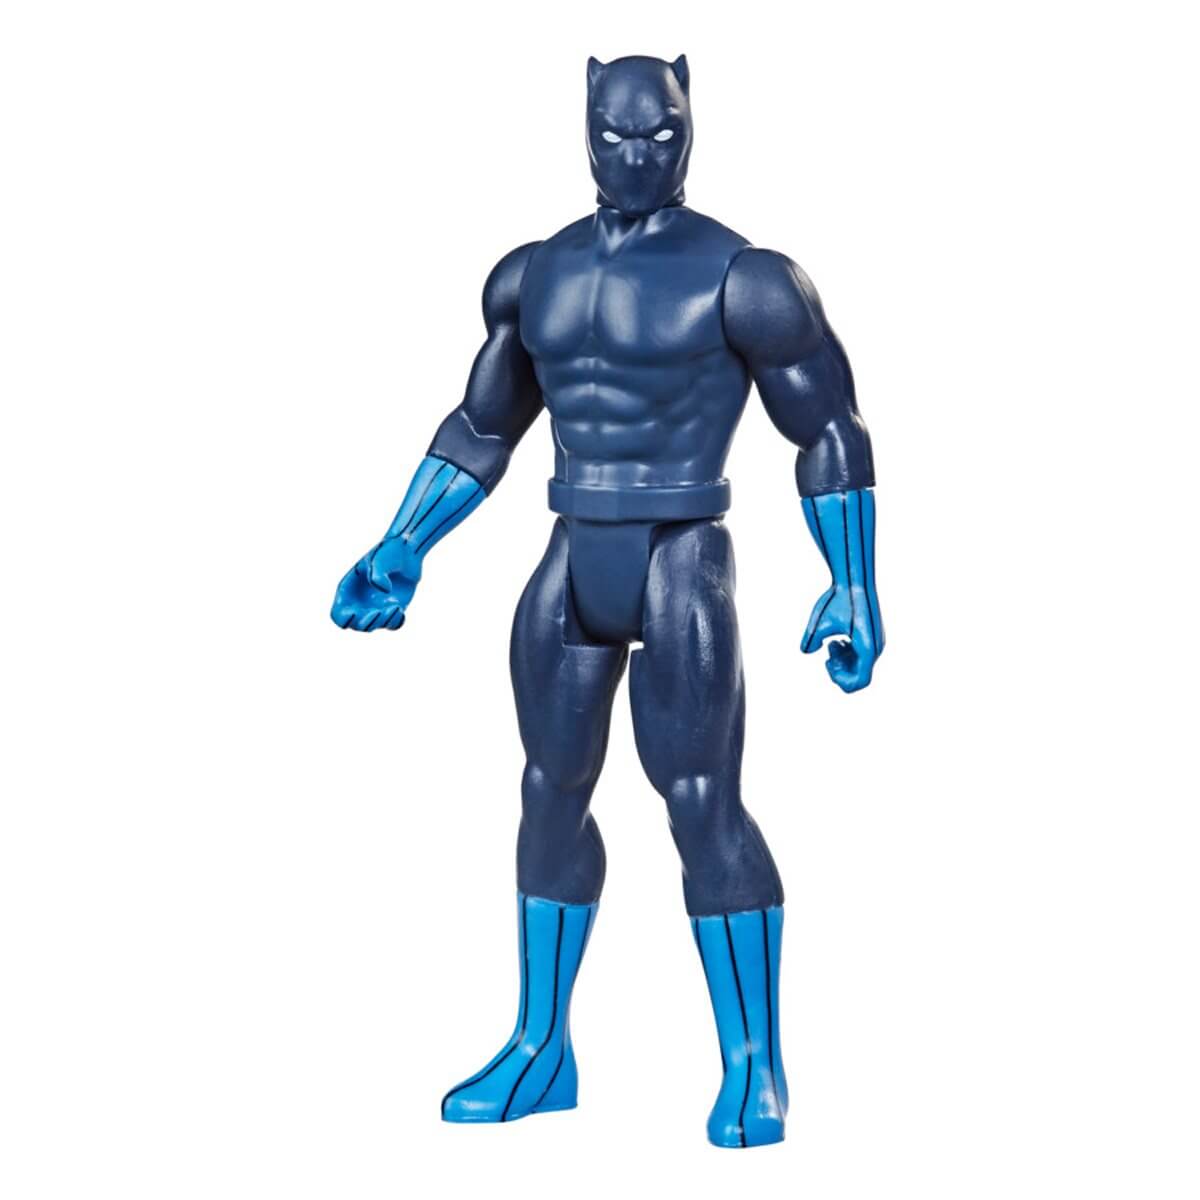 Marvel Legends Retro Collection Black Panther 3.75" Action Figure